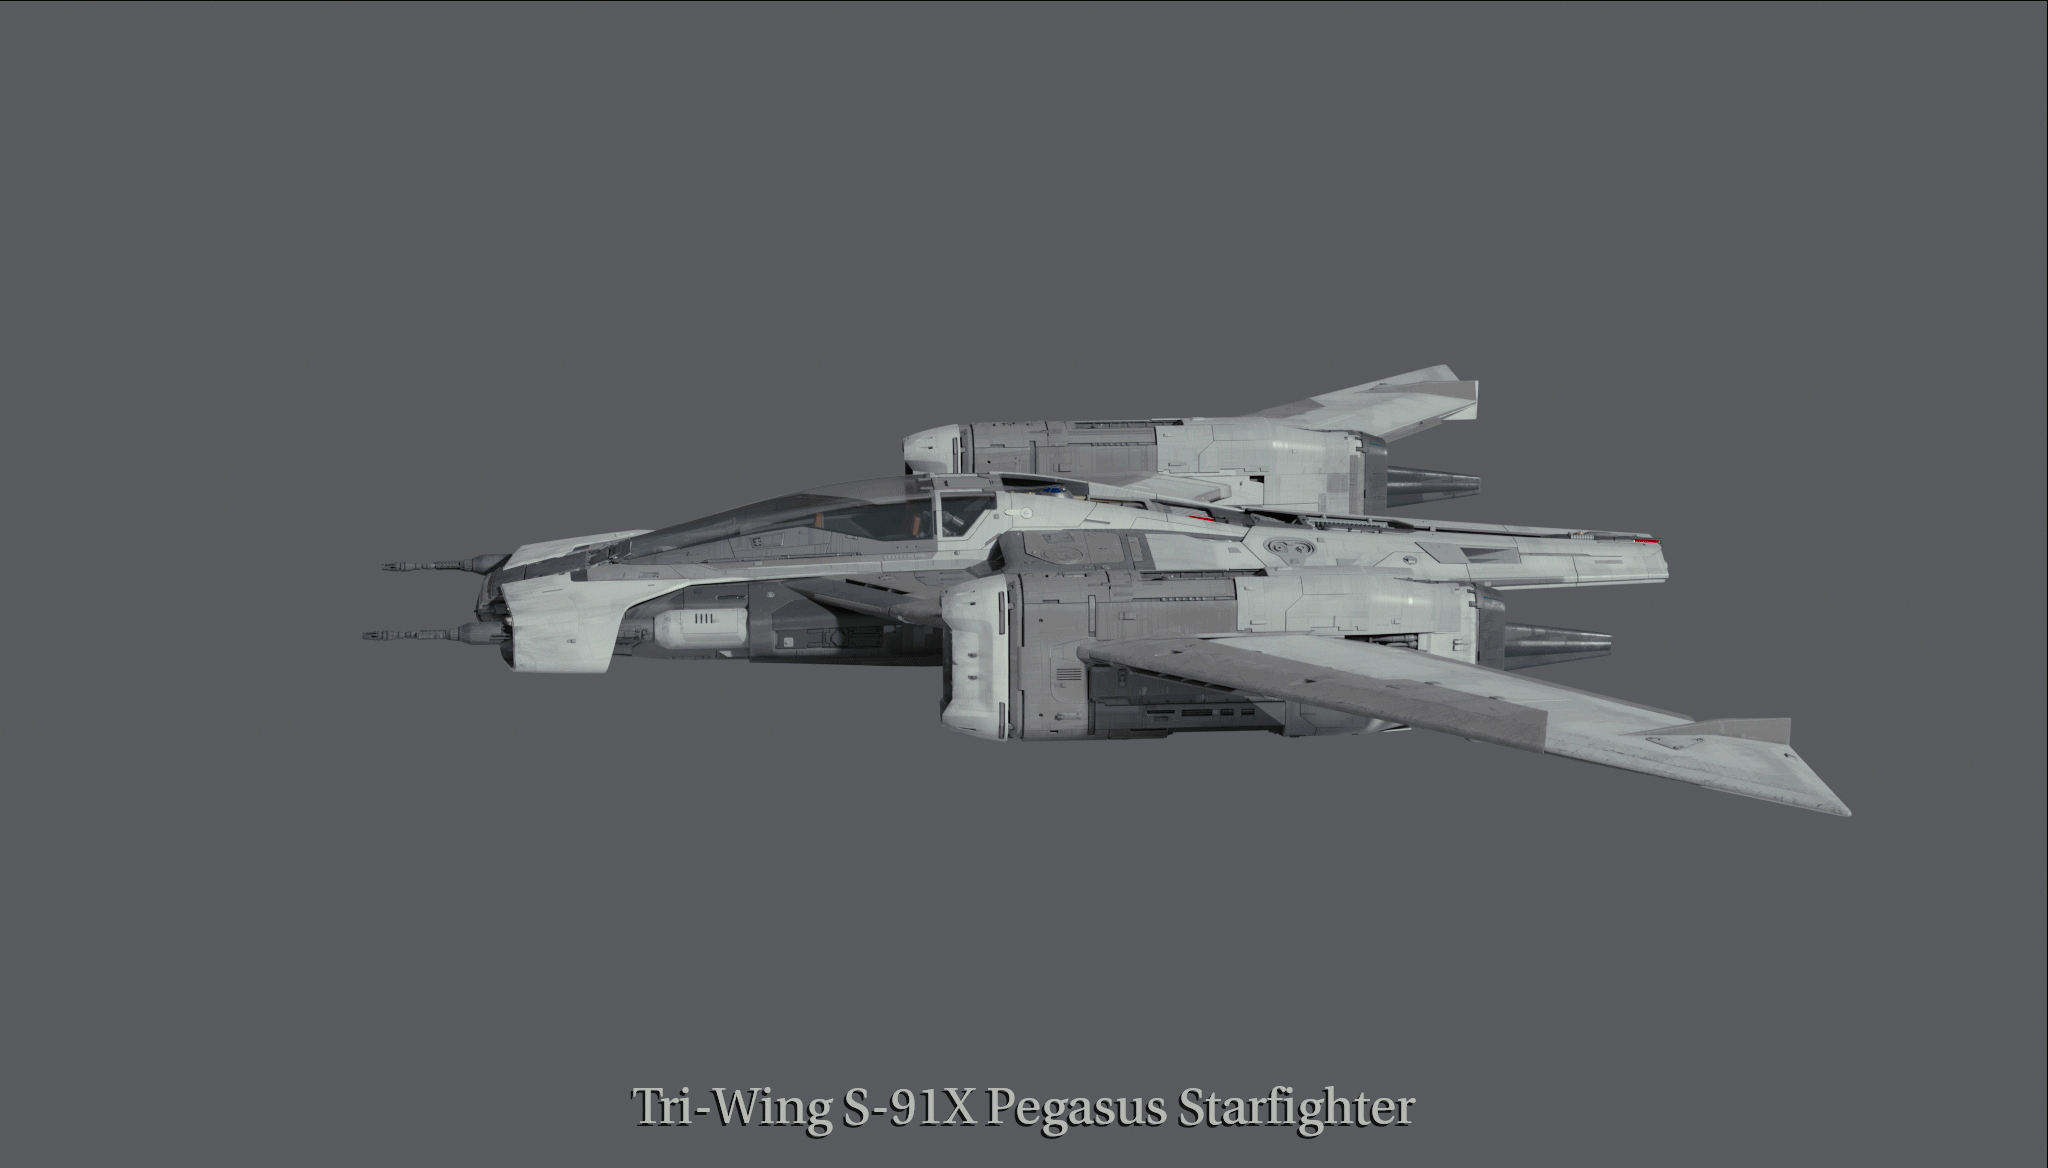 Fantasy starship Star Wars Tri-Wing S-91x Pegasus Starfighter, 2019, PCNA